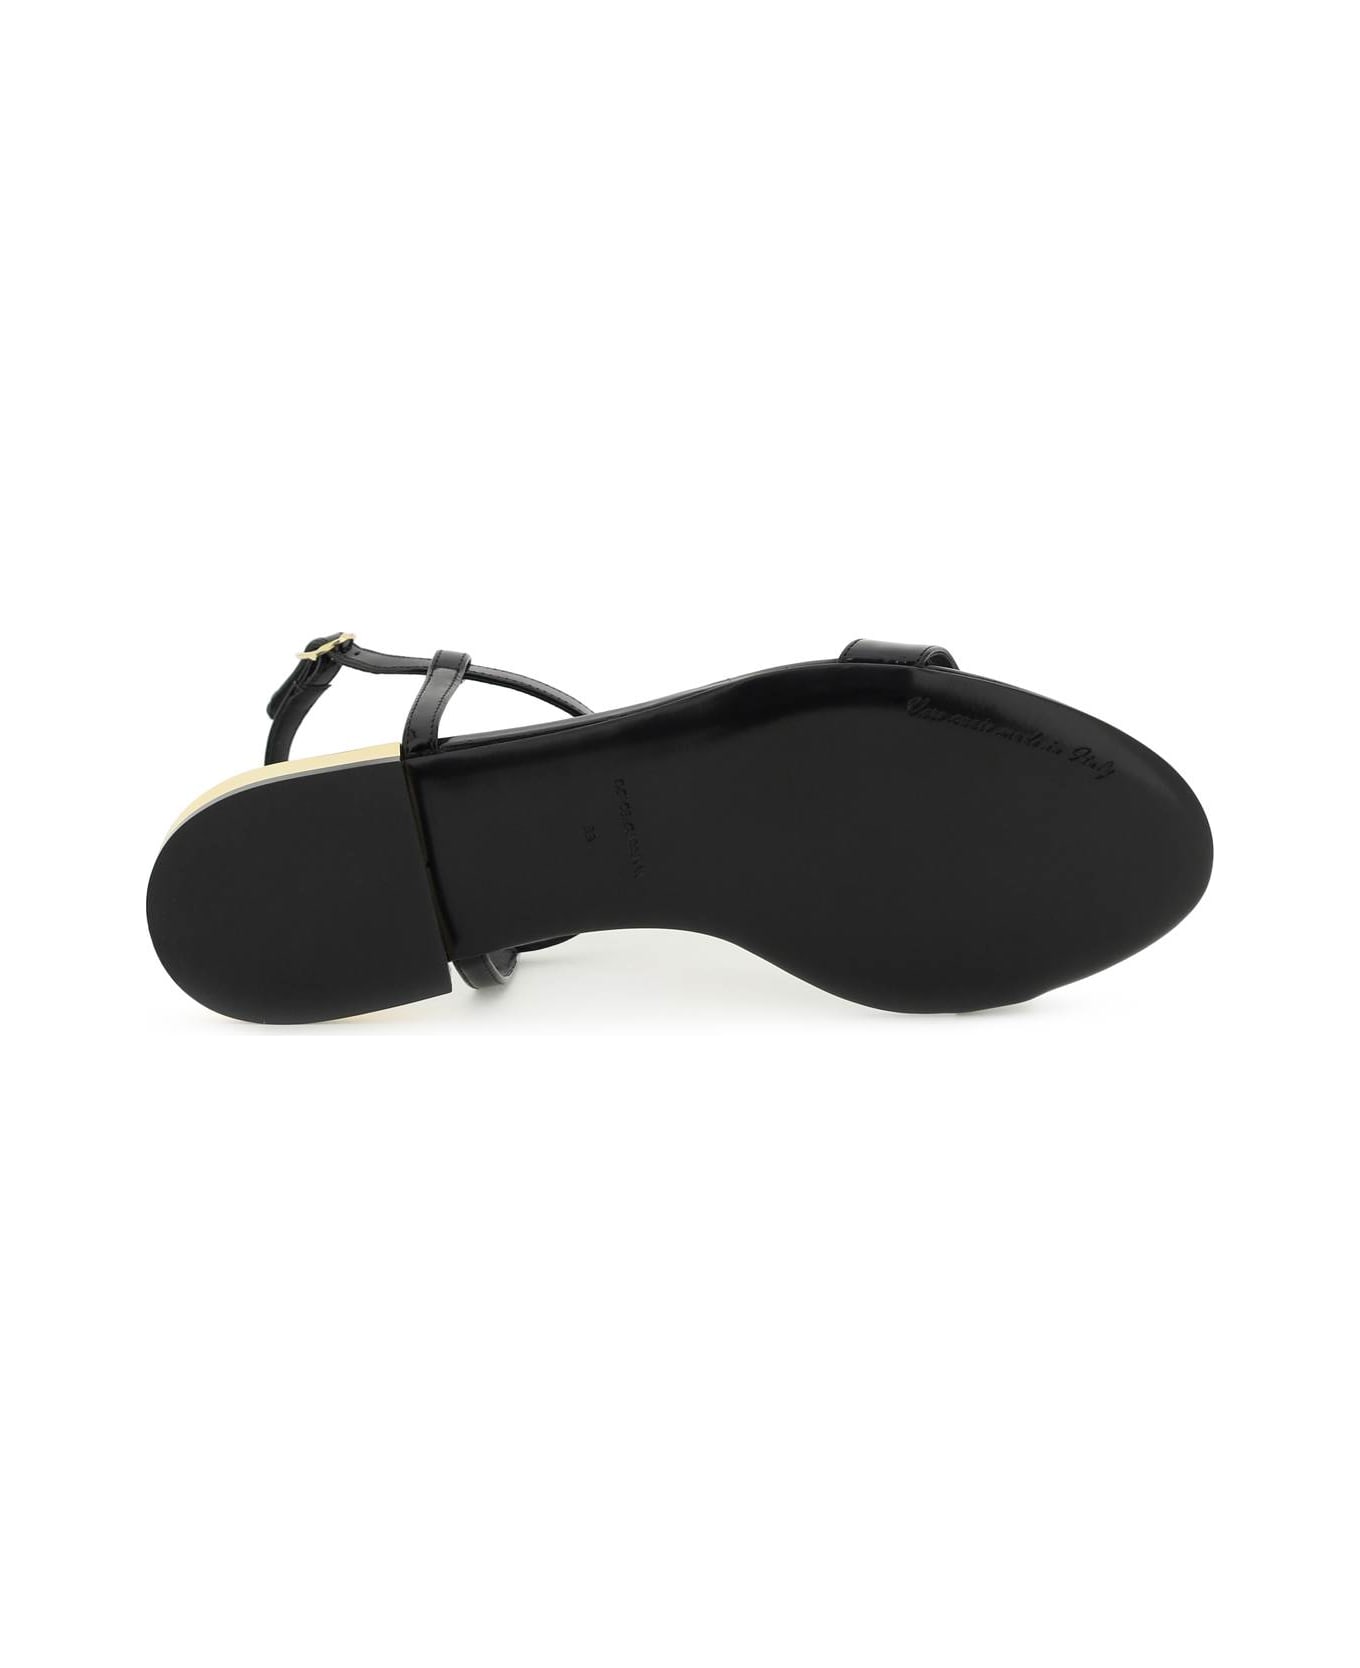 Dolce & Gabbana Leather Sandals - Nero